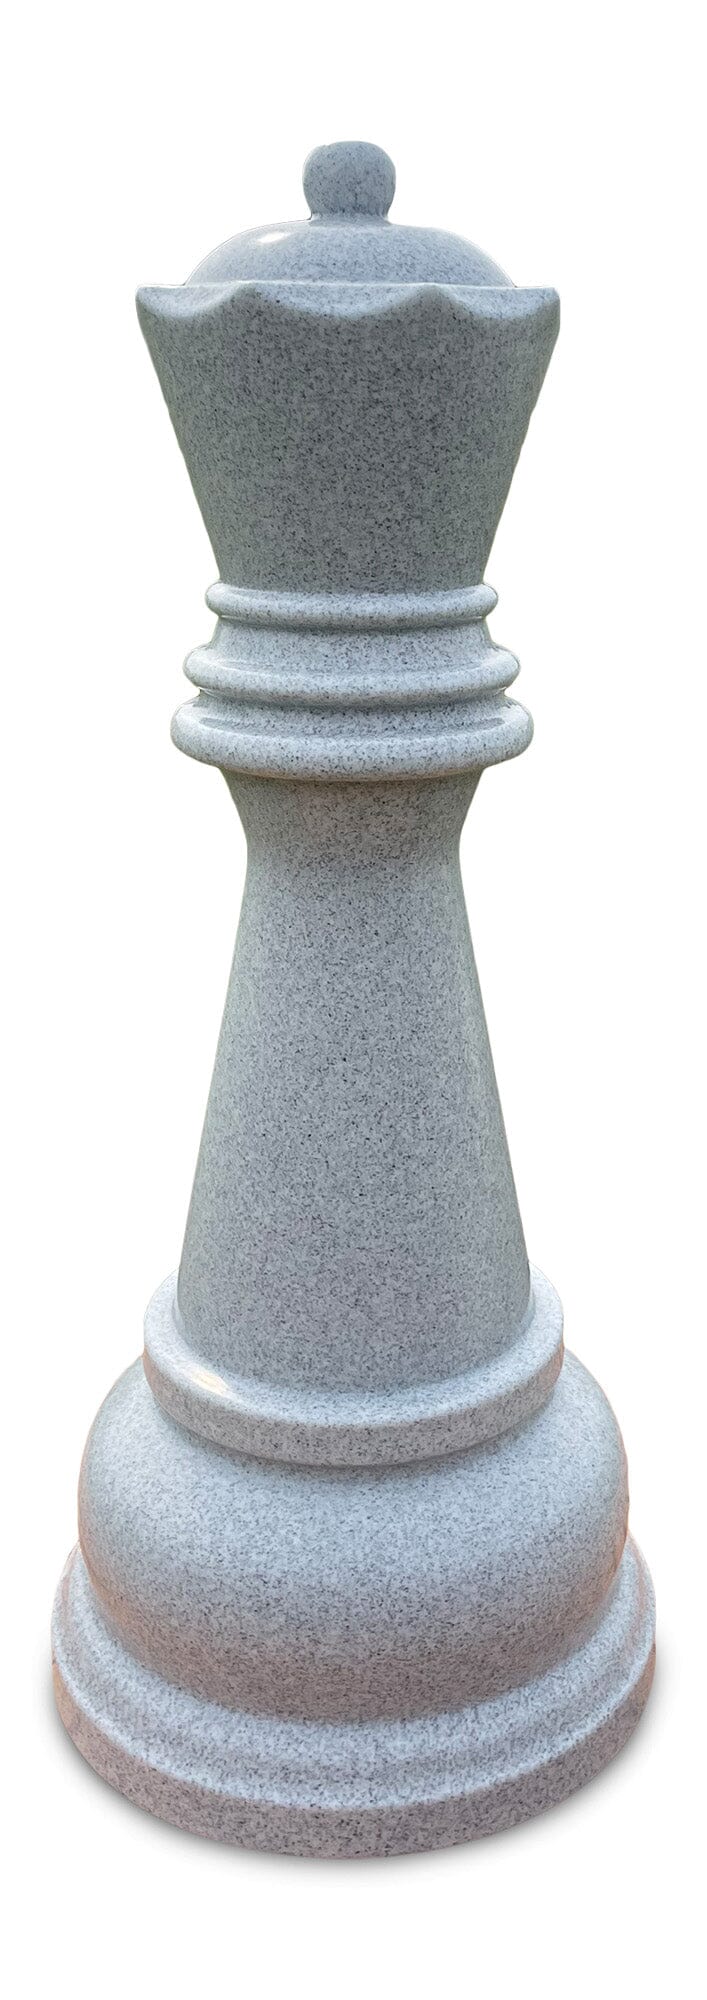 MegaChess 38-Inch Perfect Chess Set - Stone Gray Edition |  | MegaChess.com